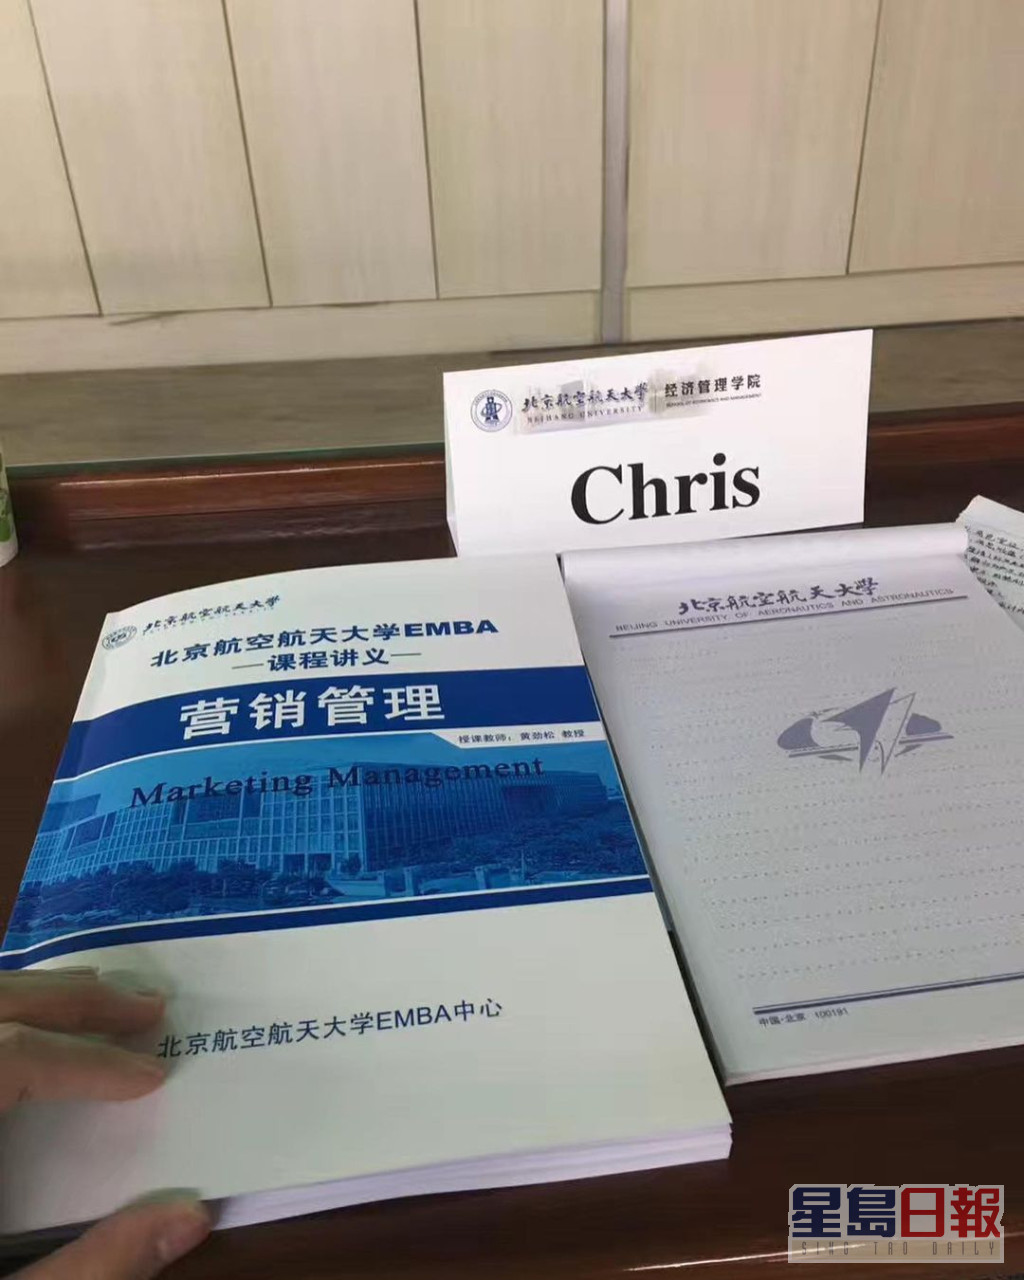 Chris报读北京航空航天大学EMBA课程，学习营销管理。